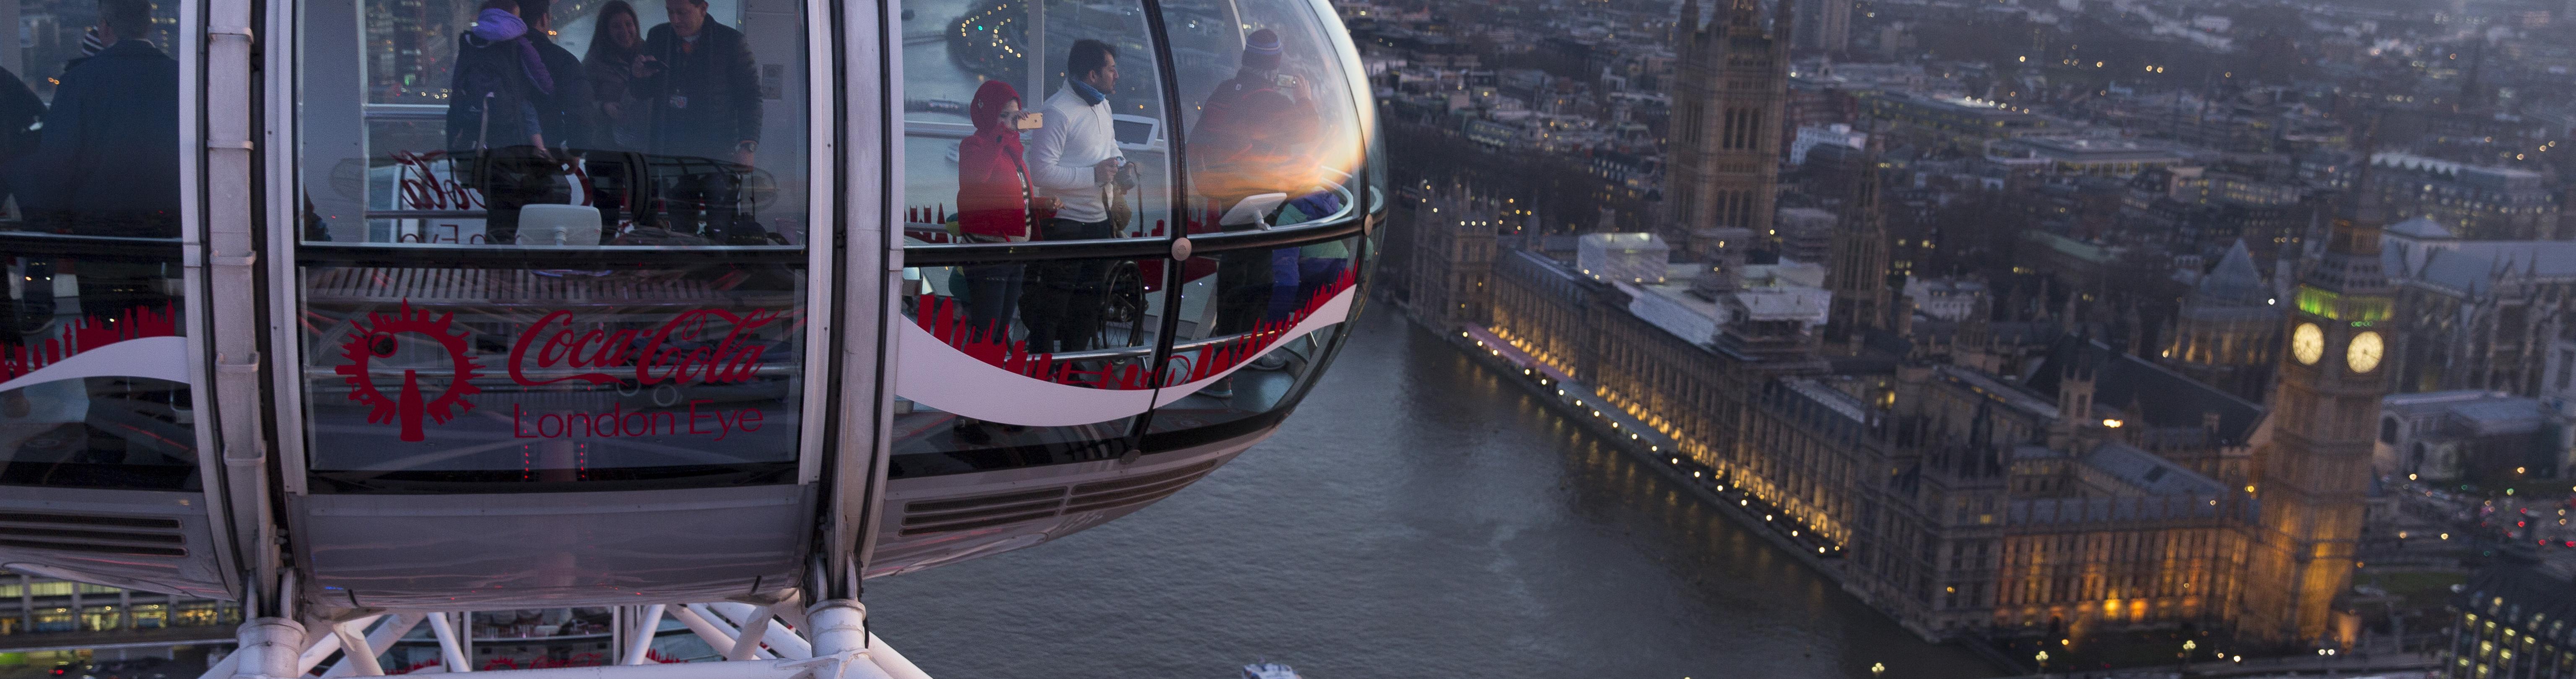 People in the London Eye ferris wheel looking over Parliament